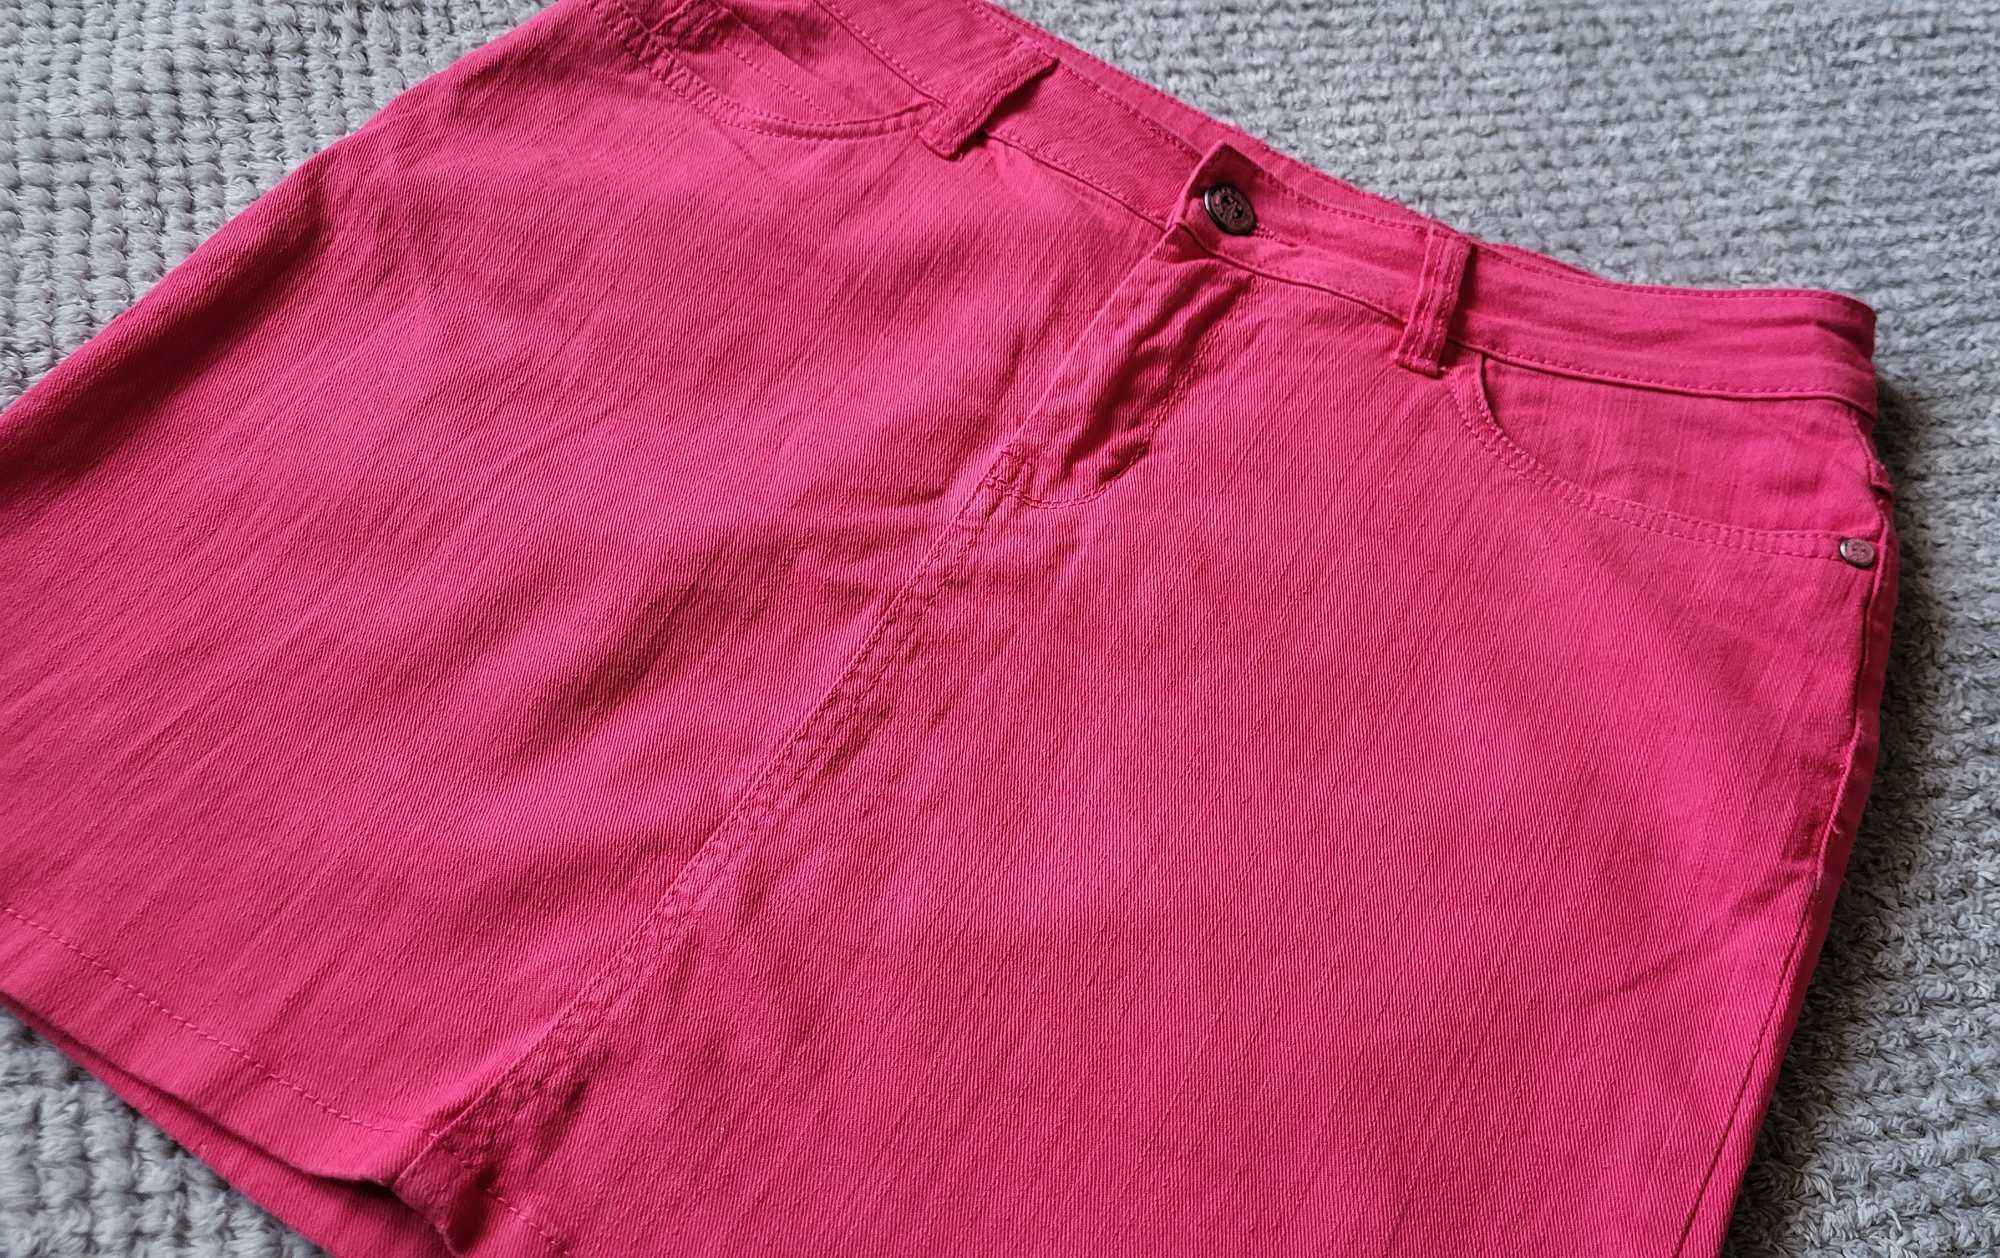 Jeansowa mini spódnica w kolorze fuksji, rozmiar L